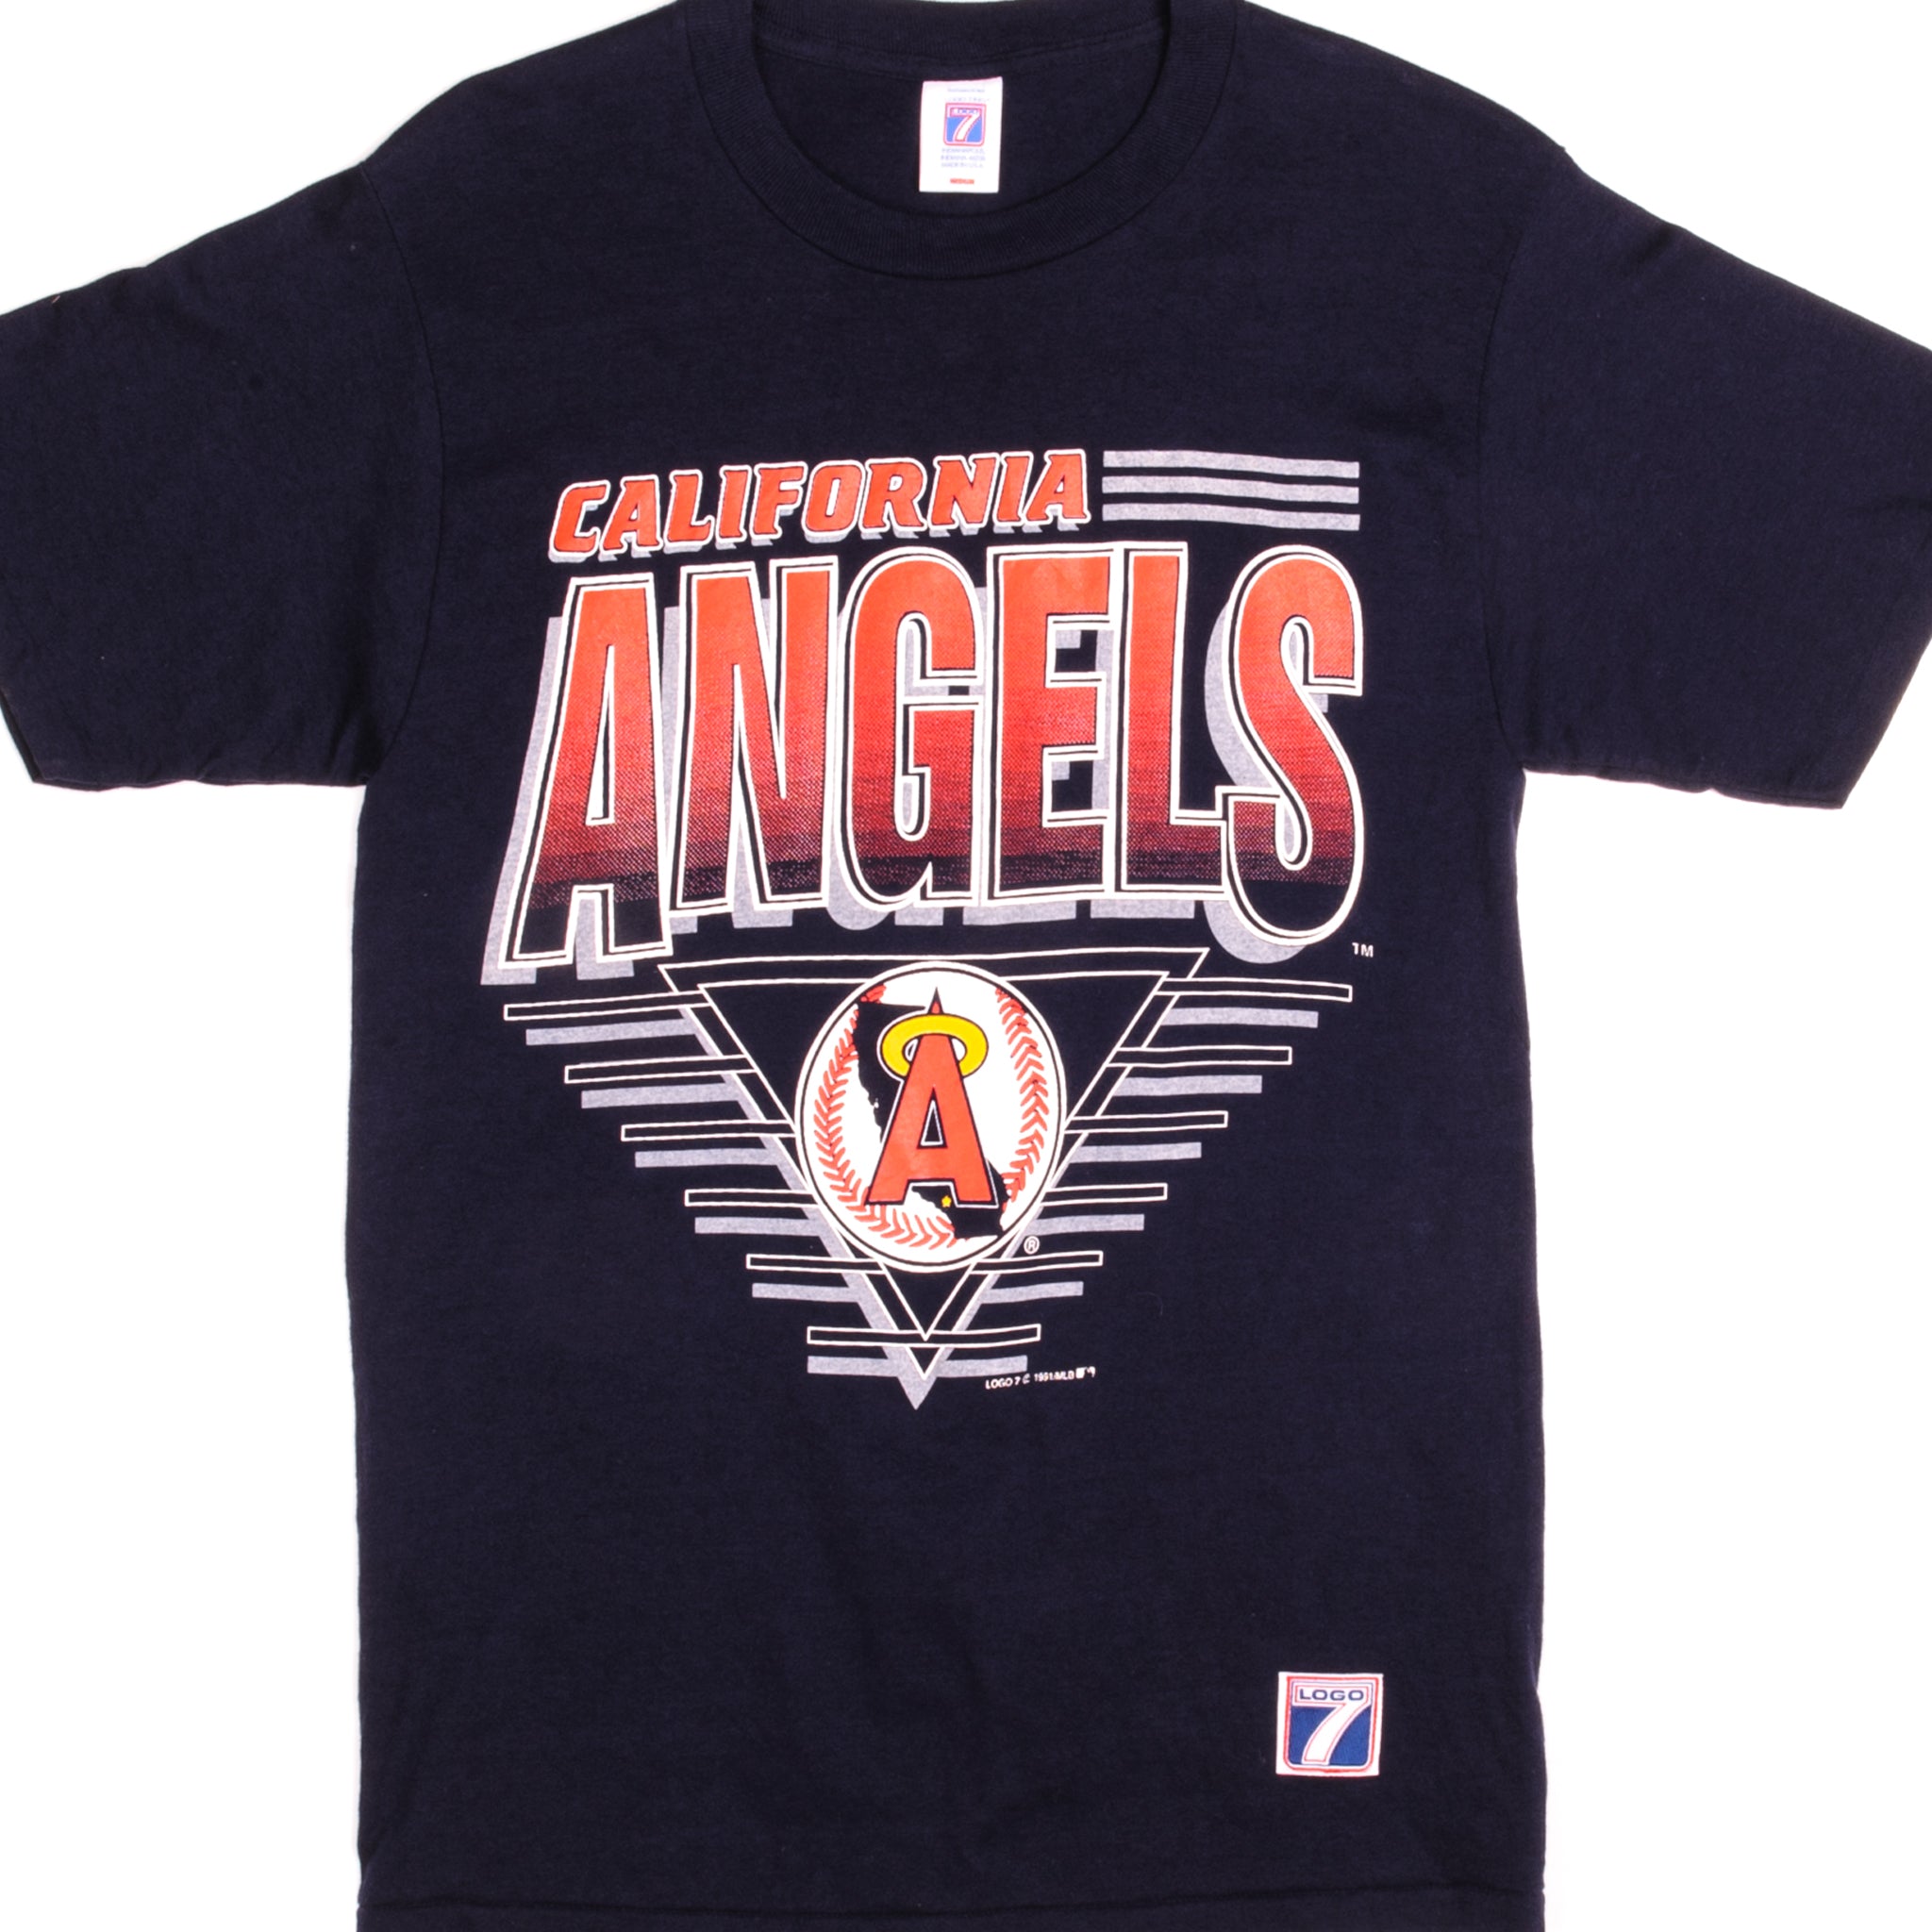 1988 California Angels Shirtangels Champion Shirt 80s Angels 